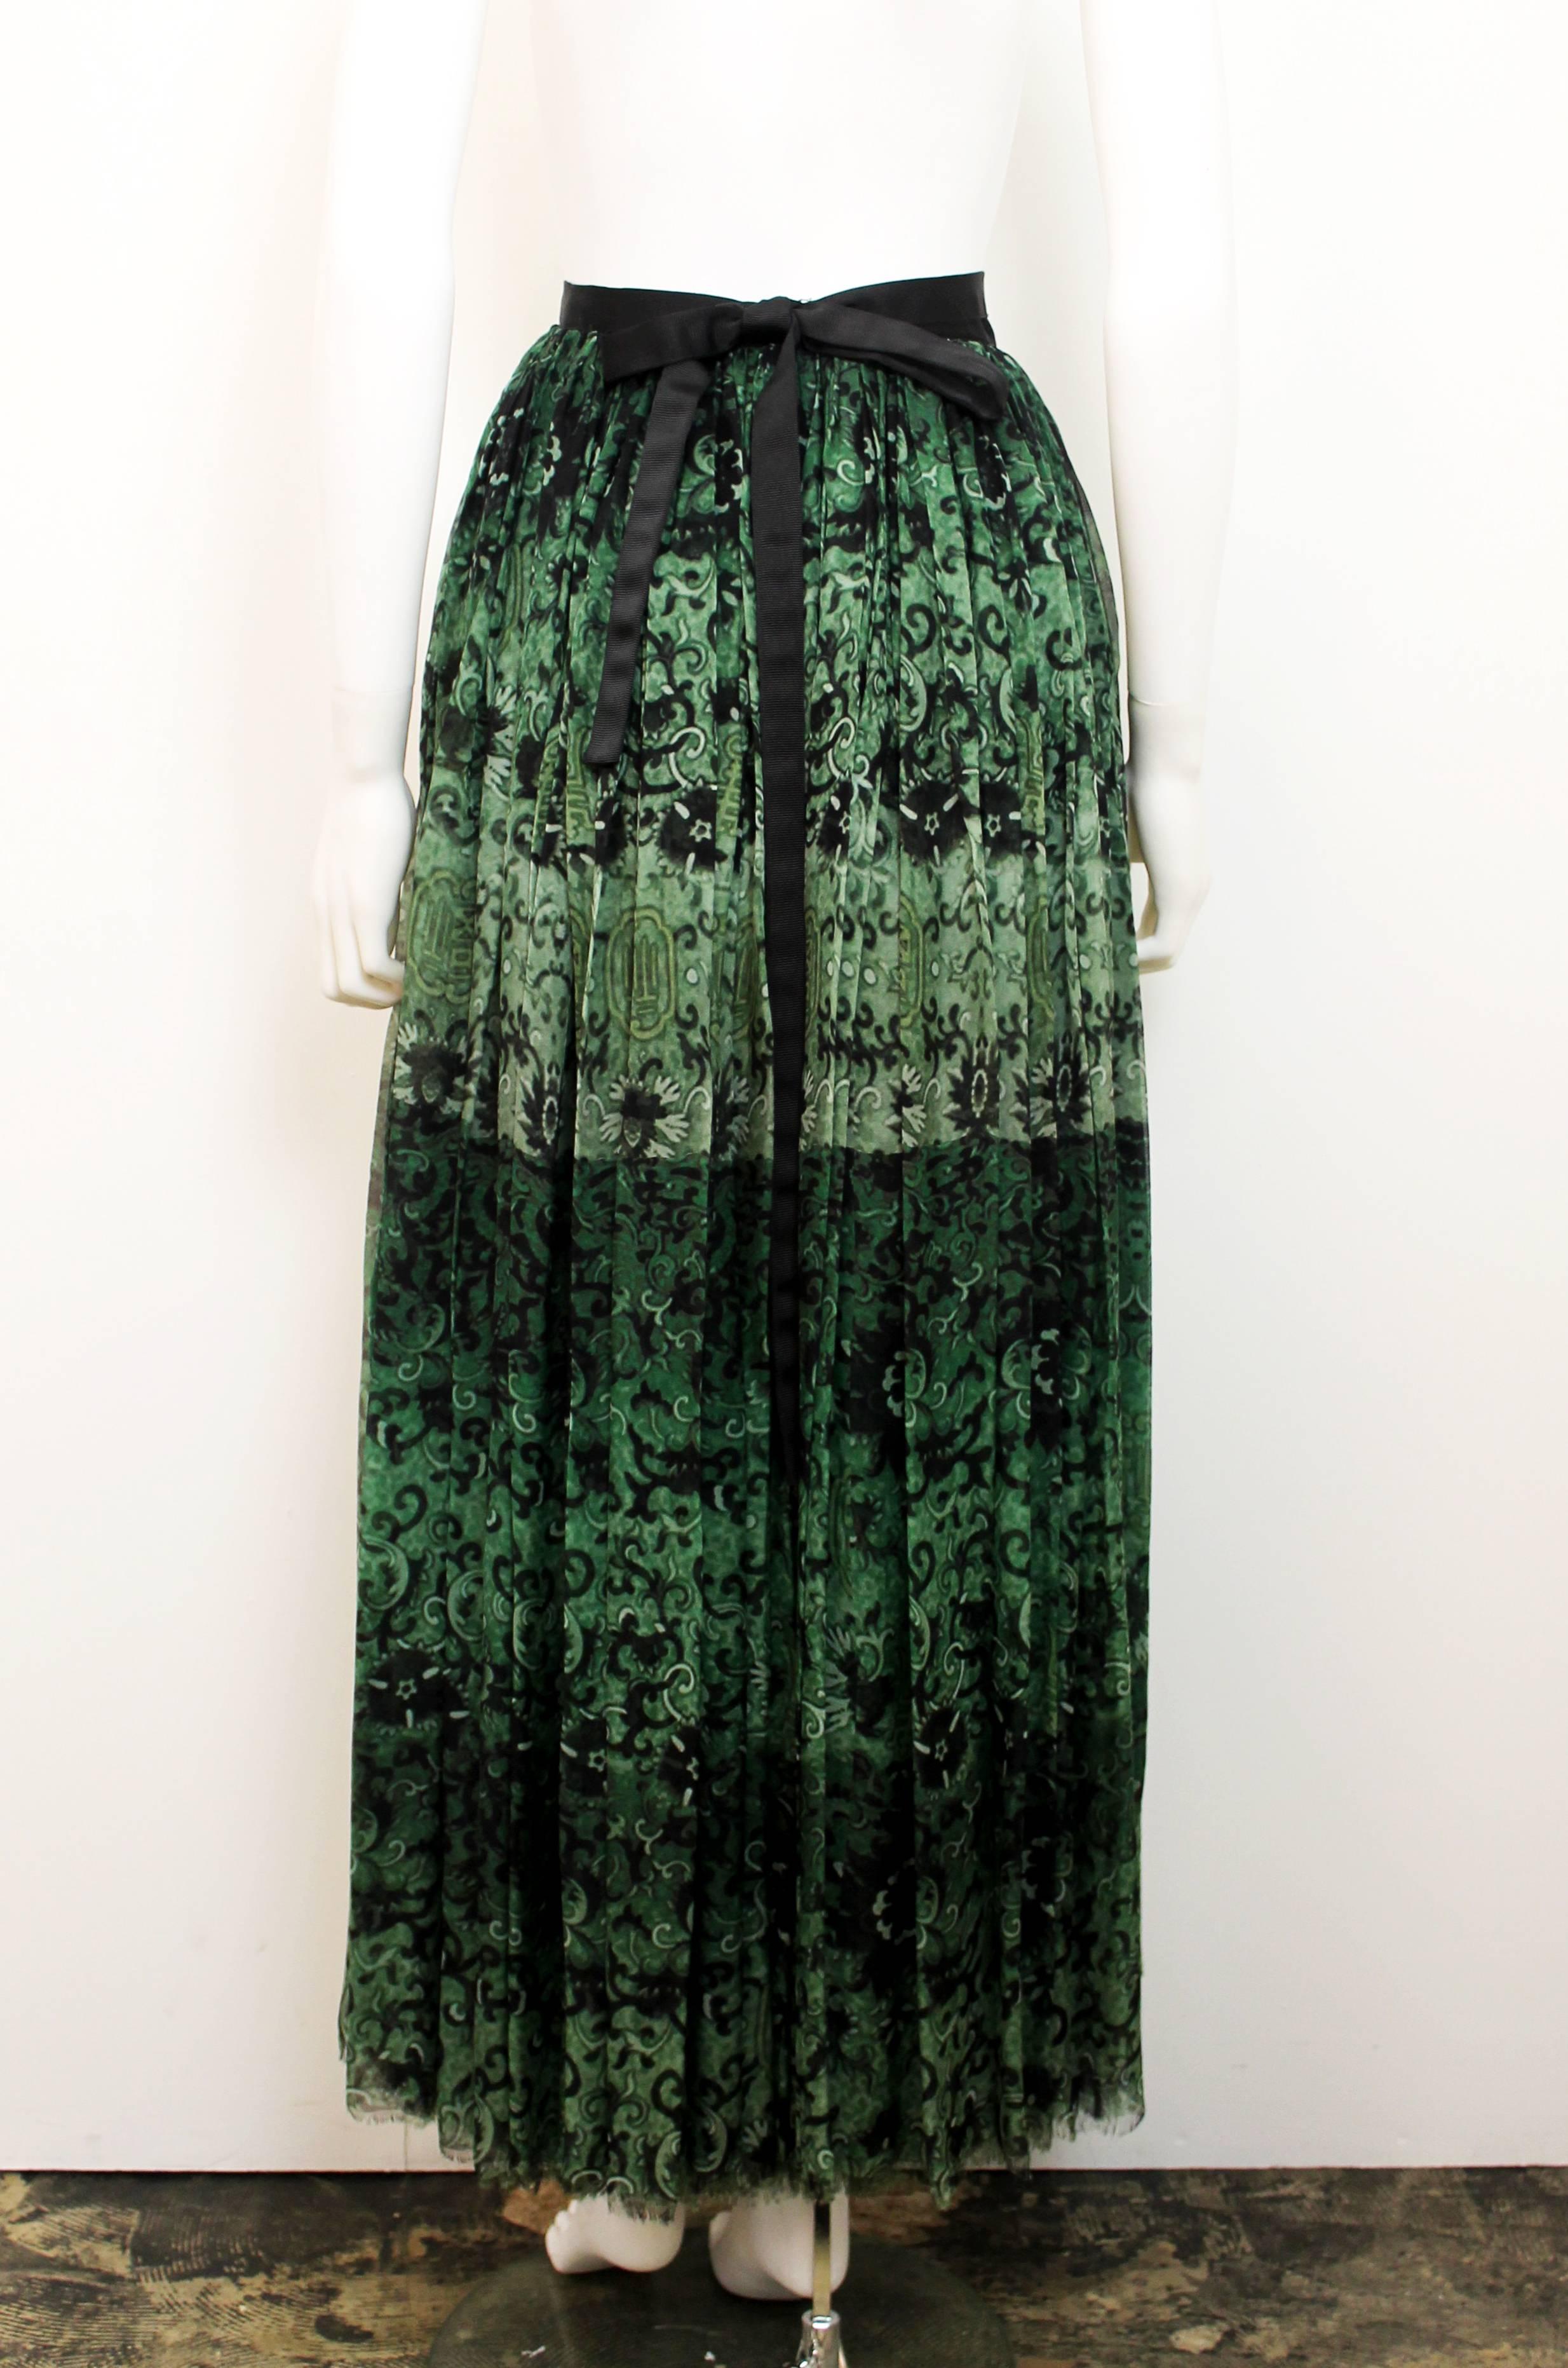 Mary Katrantzou AW 2011 Runway Emerald Printed Wrap-Skirt 1